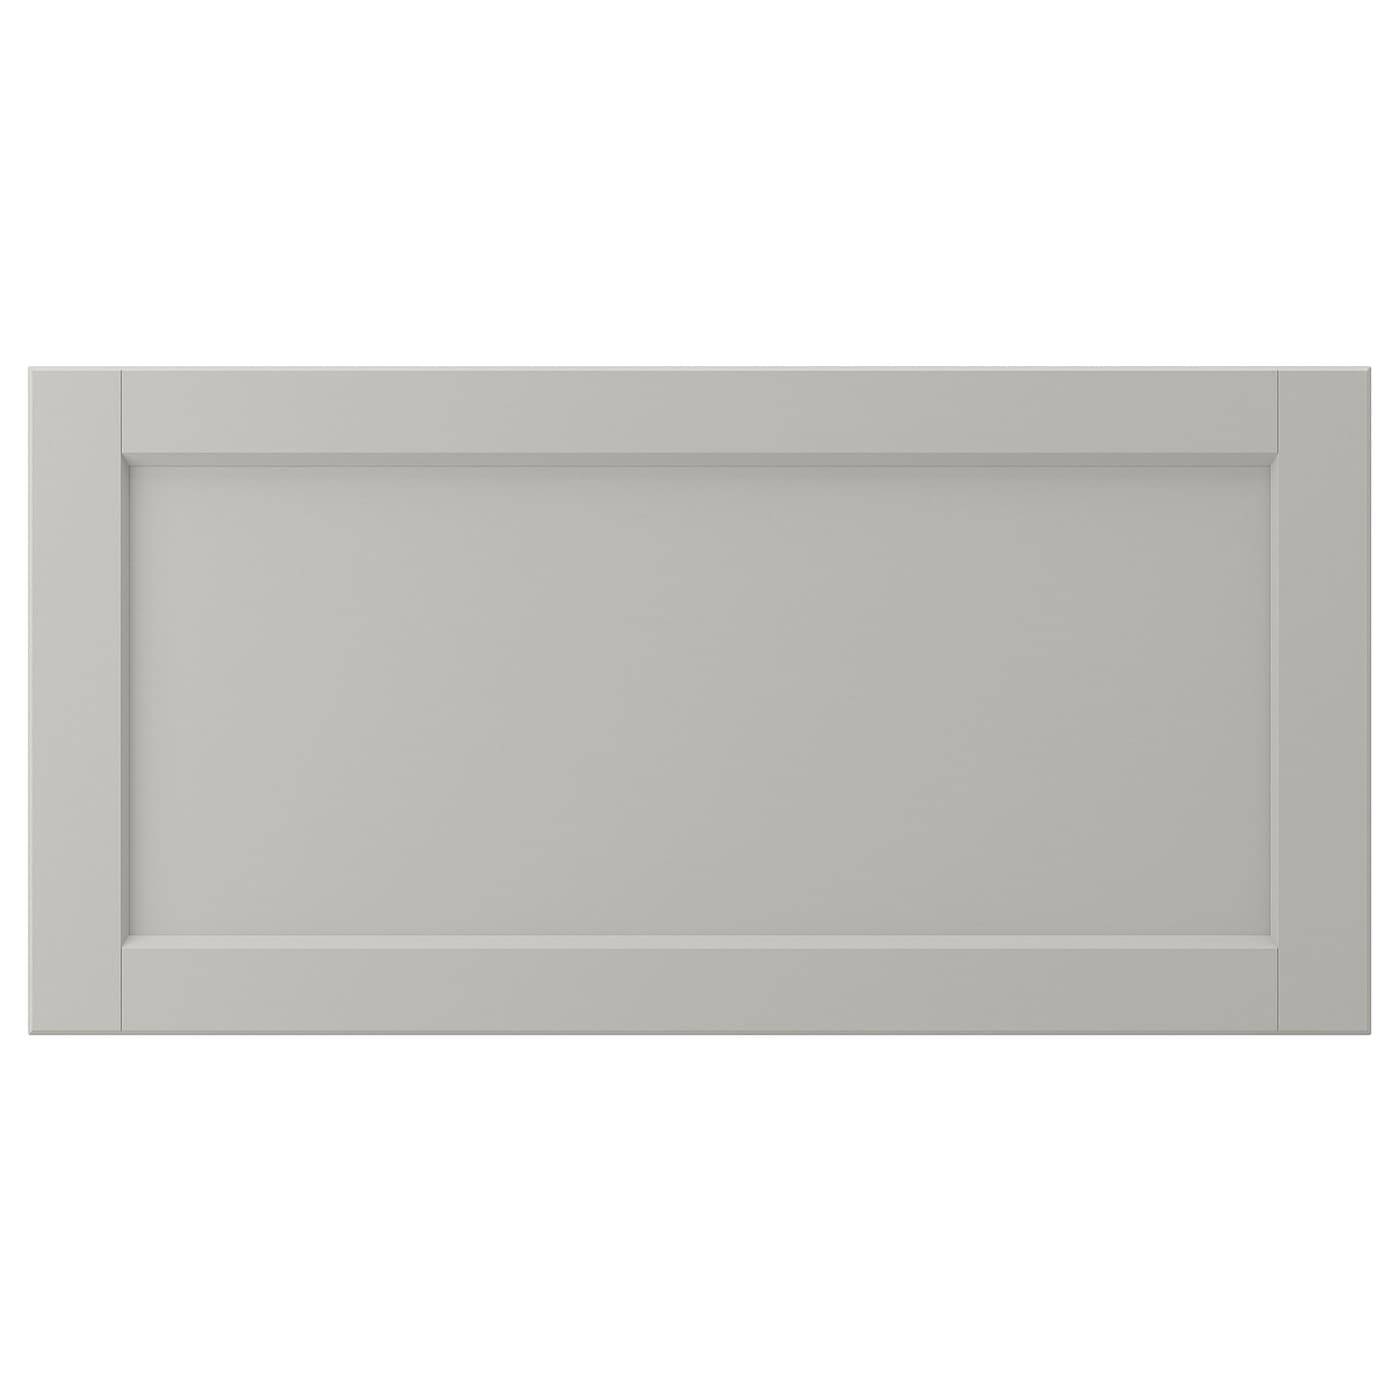 Фасад ящика - IKEA LERHYTTAN, 40х80 см, светло-серый, ЛЕРХЮТТАН ИКЕА